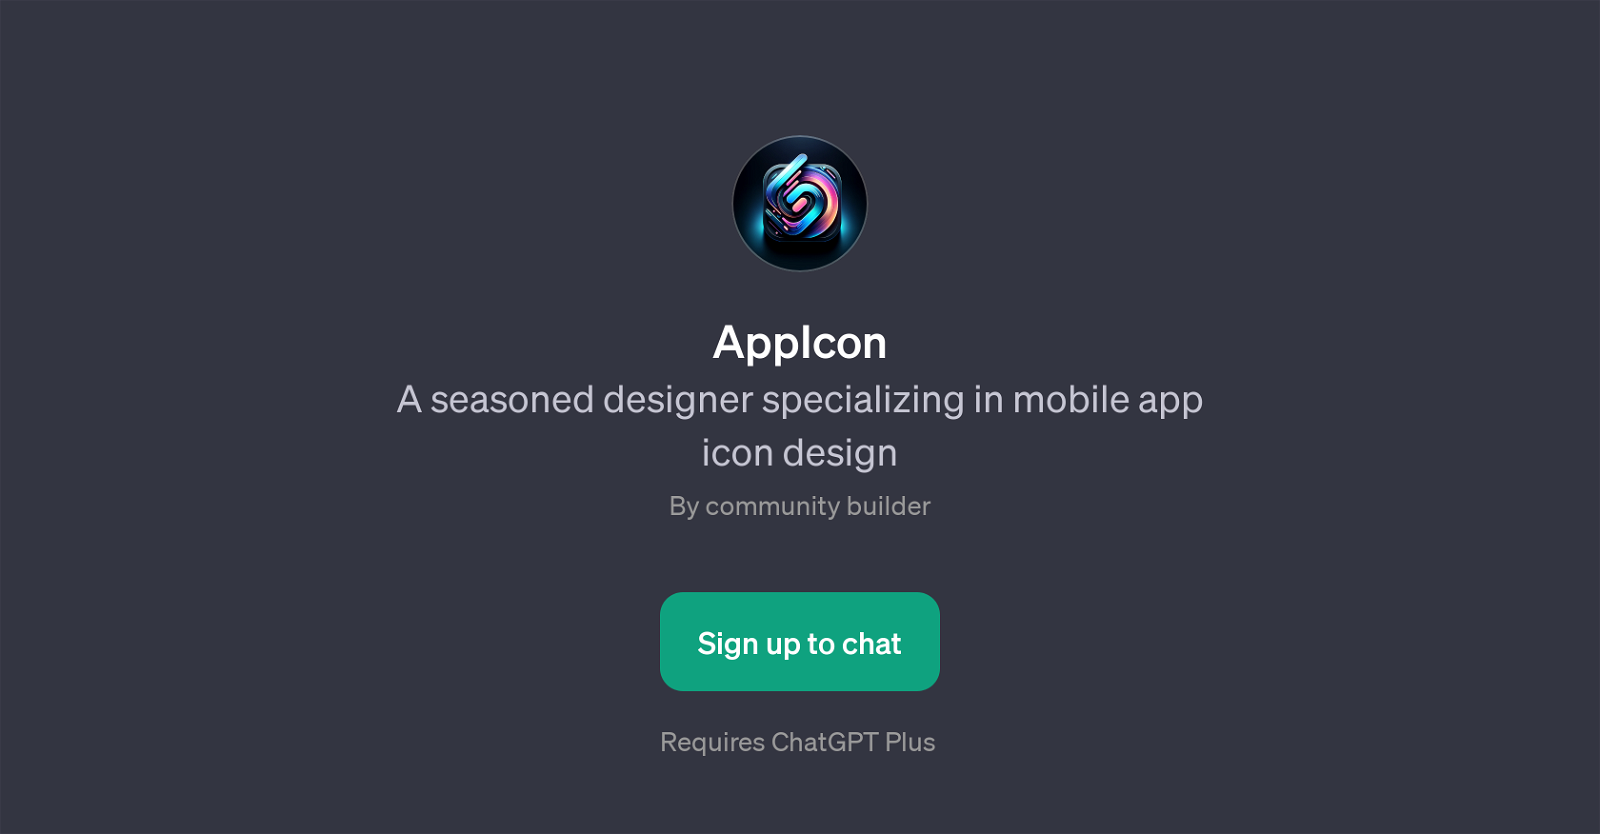 AppIcon website